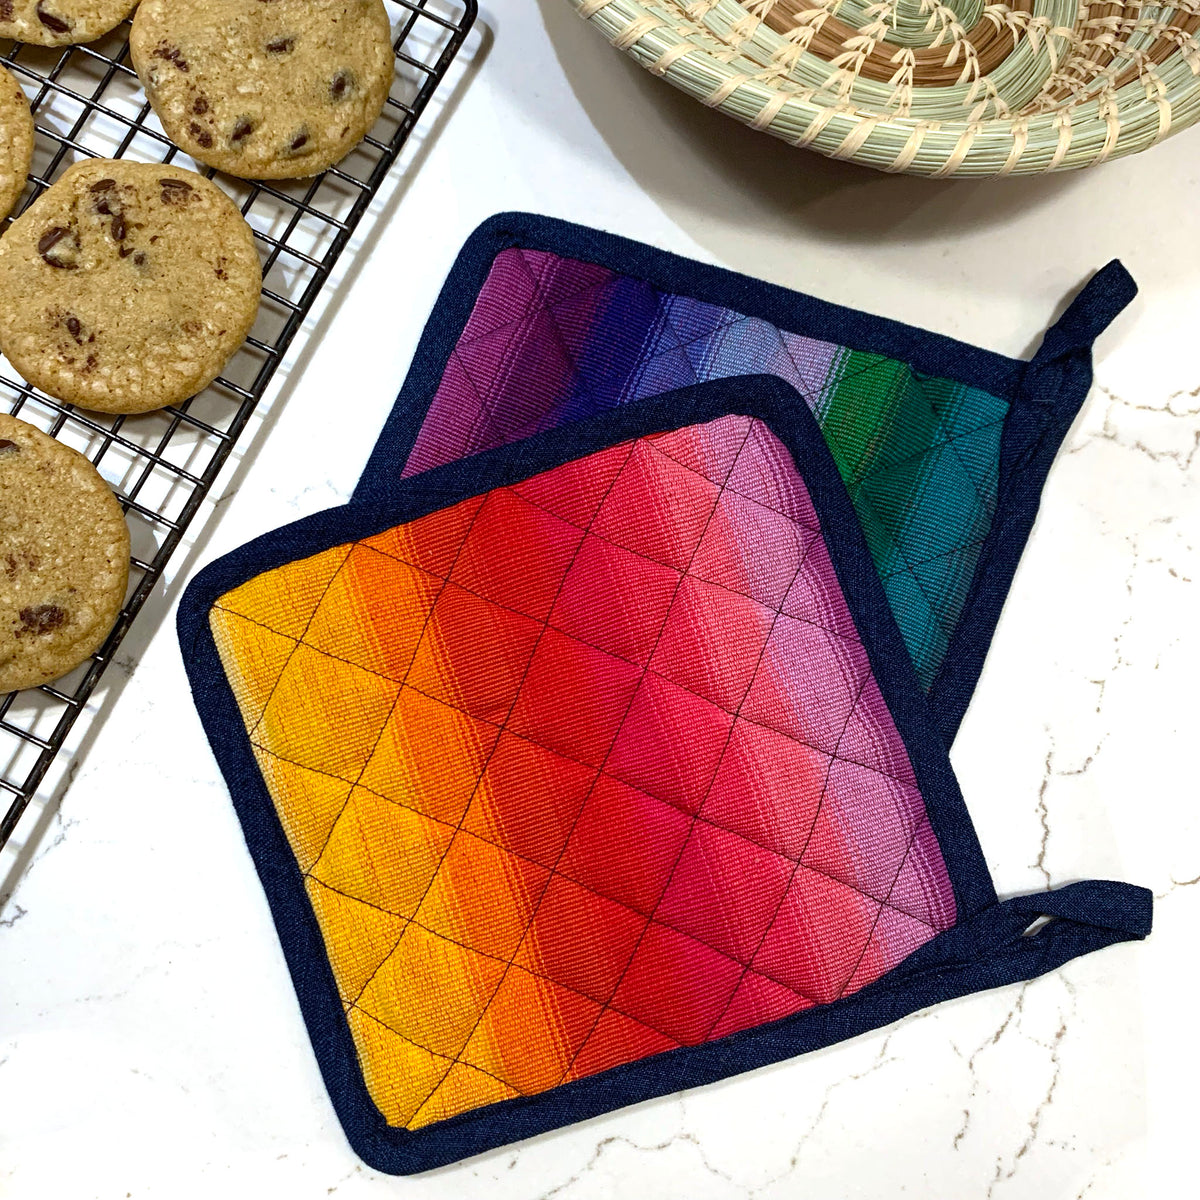 handwoven rainbow potholders with cookies and basket